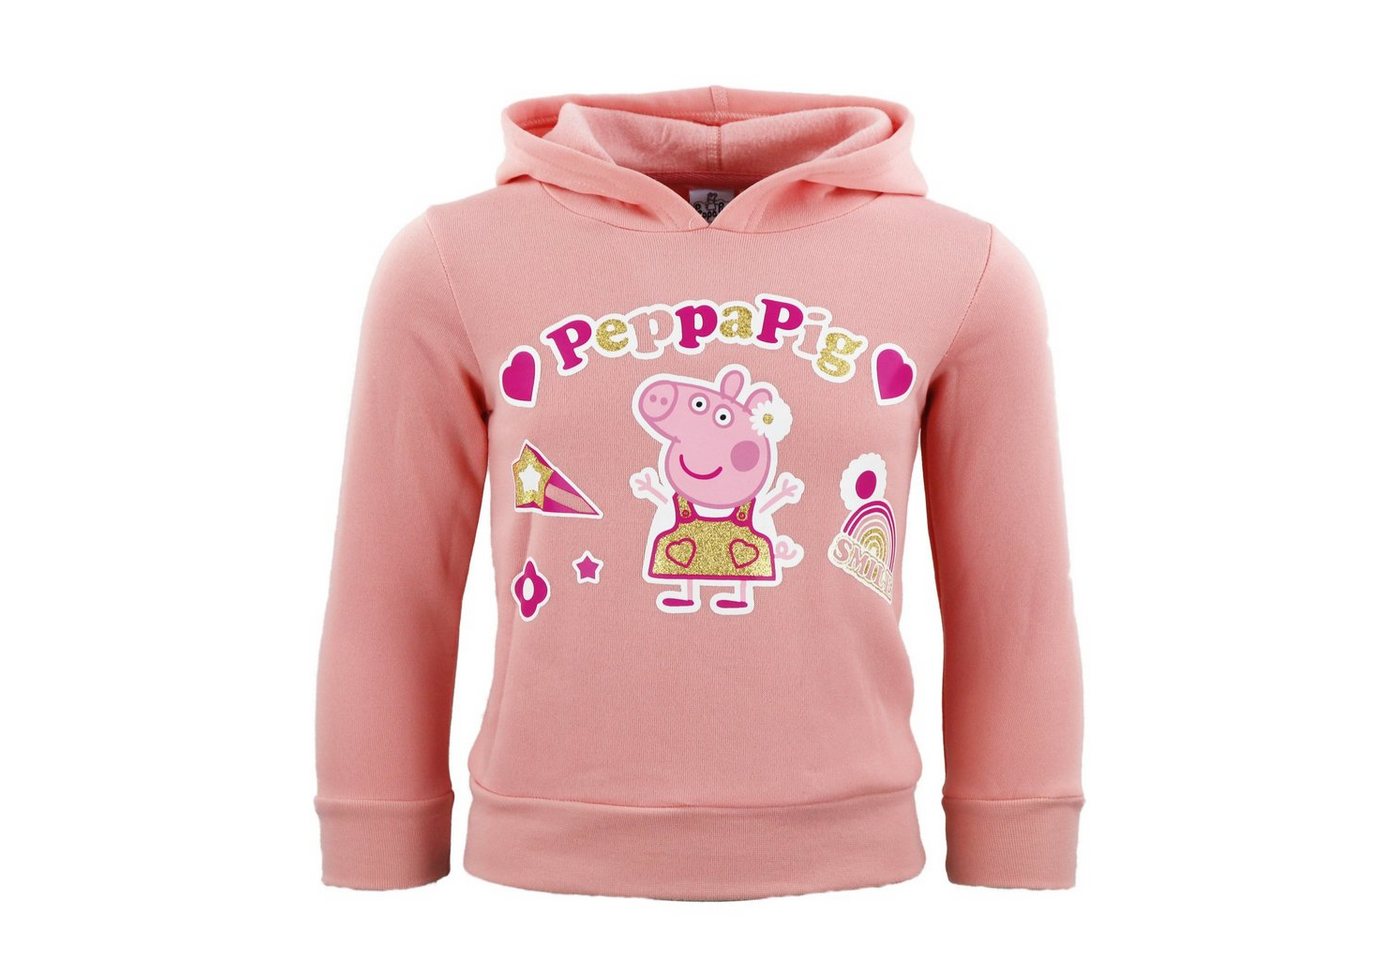 Peppa Pig Kapuzenpullover Peppa Pig Wutz Kinder Kapuzenpullover Pulli Gr. 98 bis 116 Mädchen in Rosa Lila von Peppa Pig